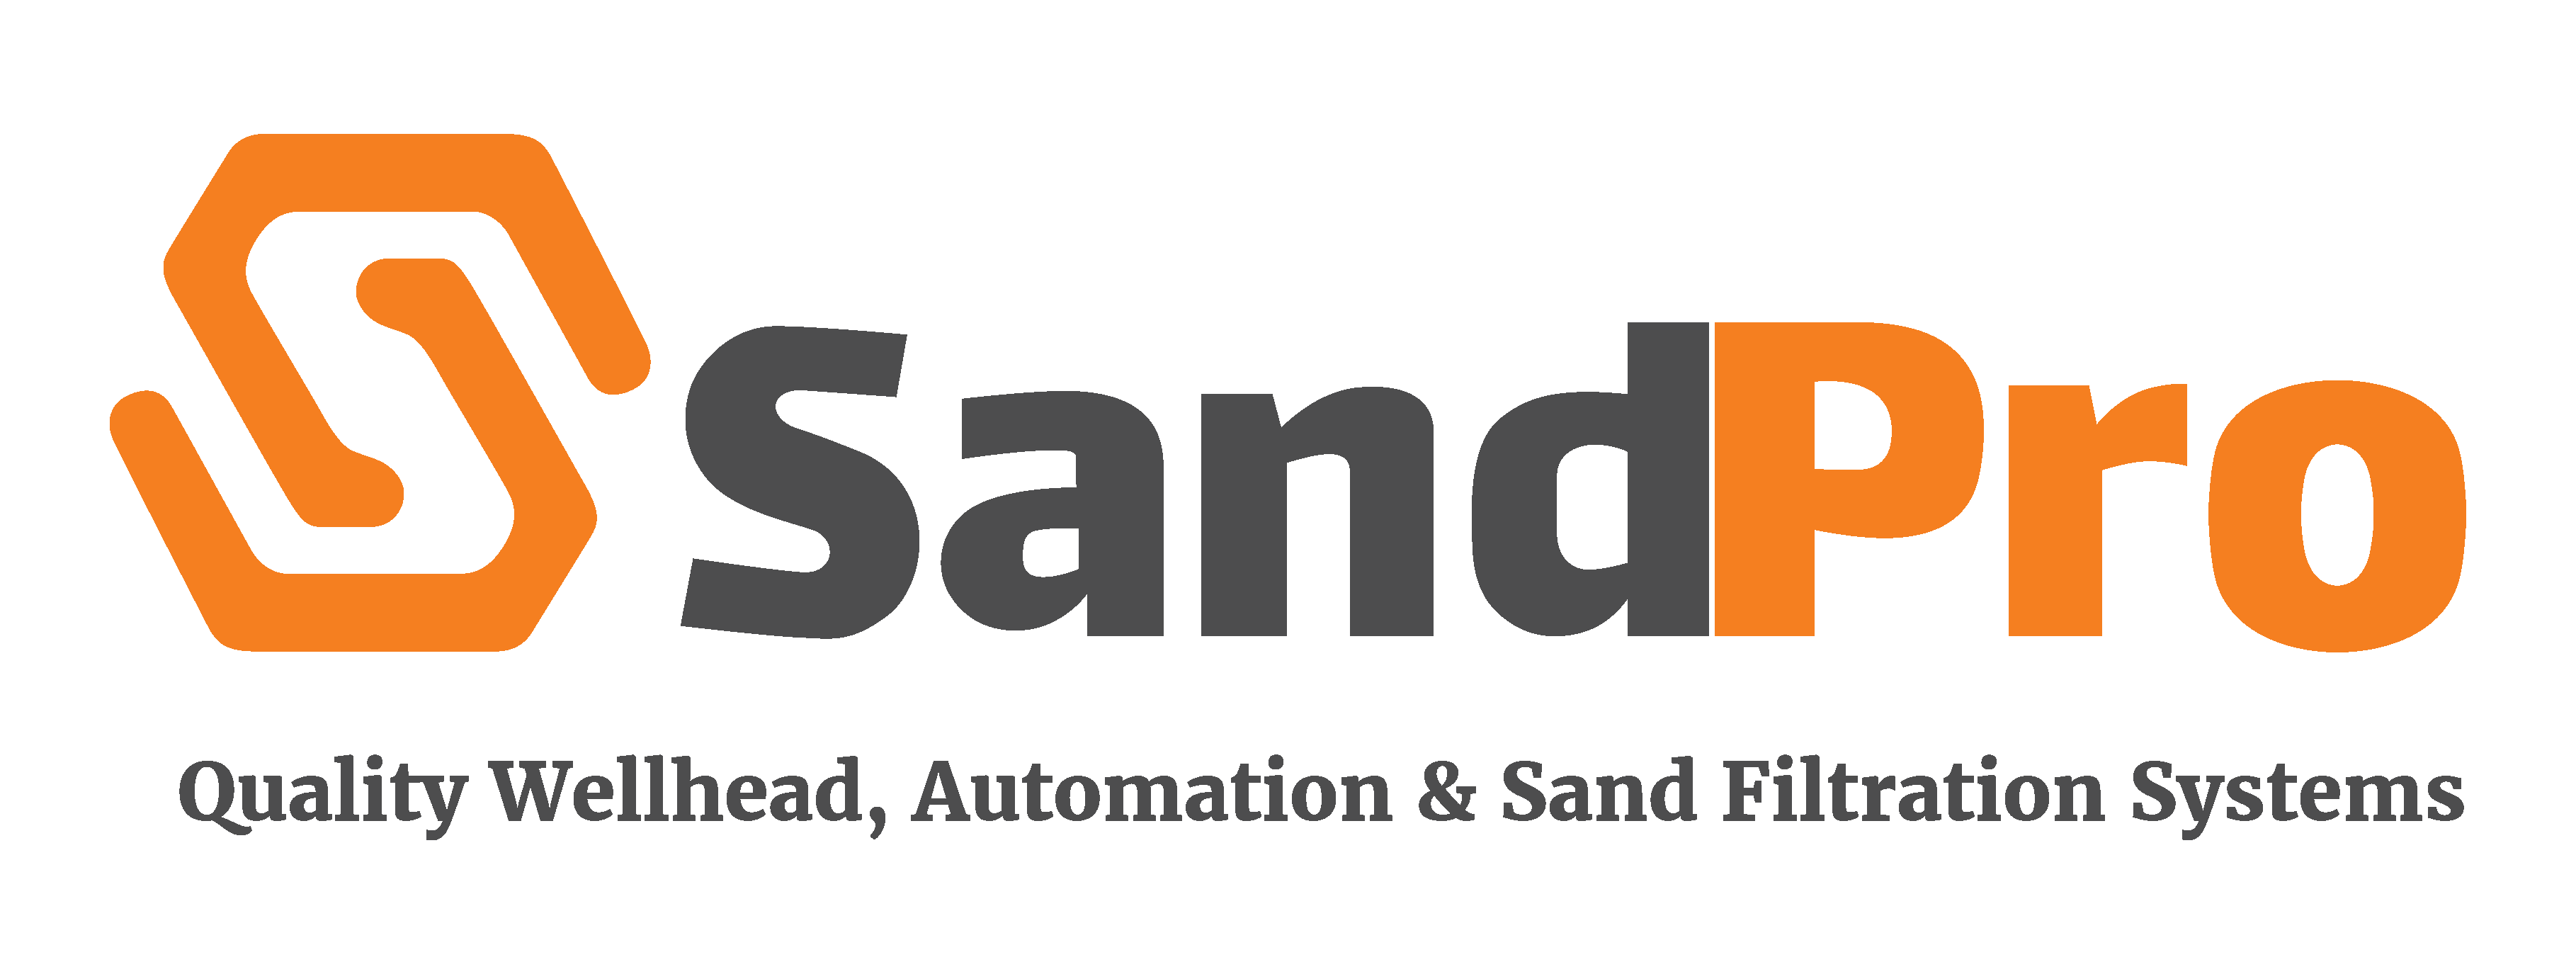 SandPro